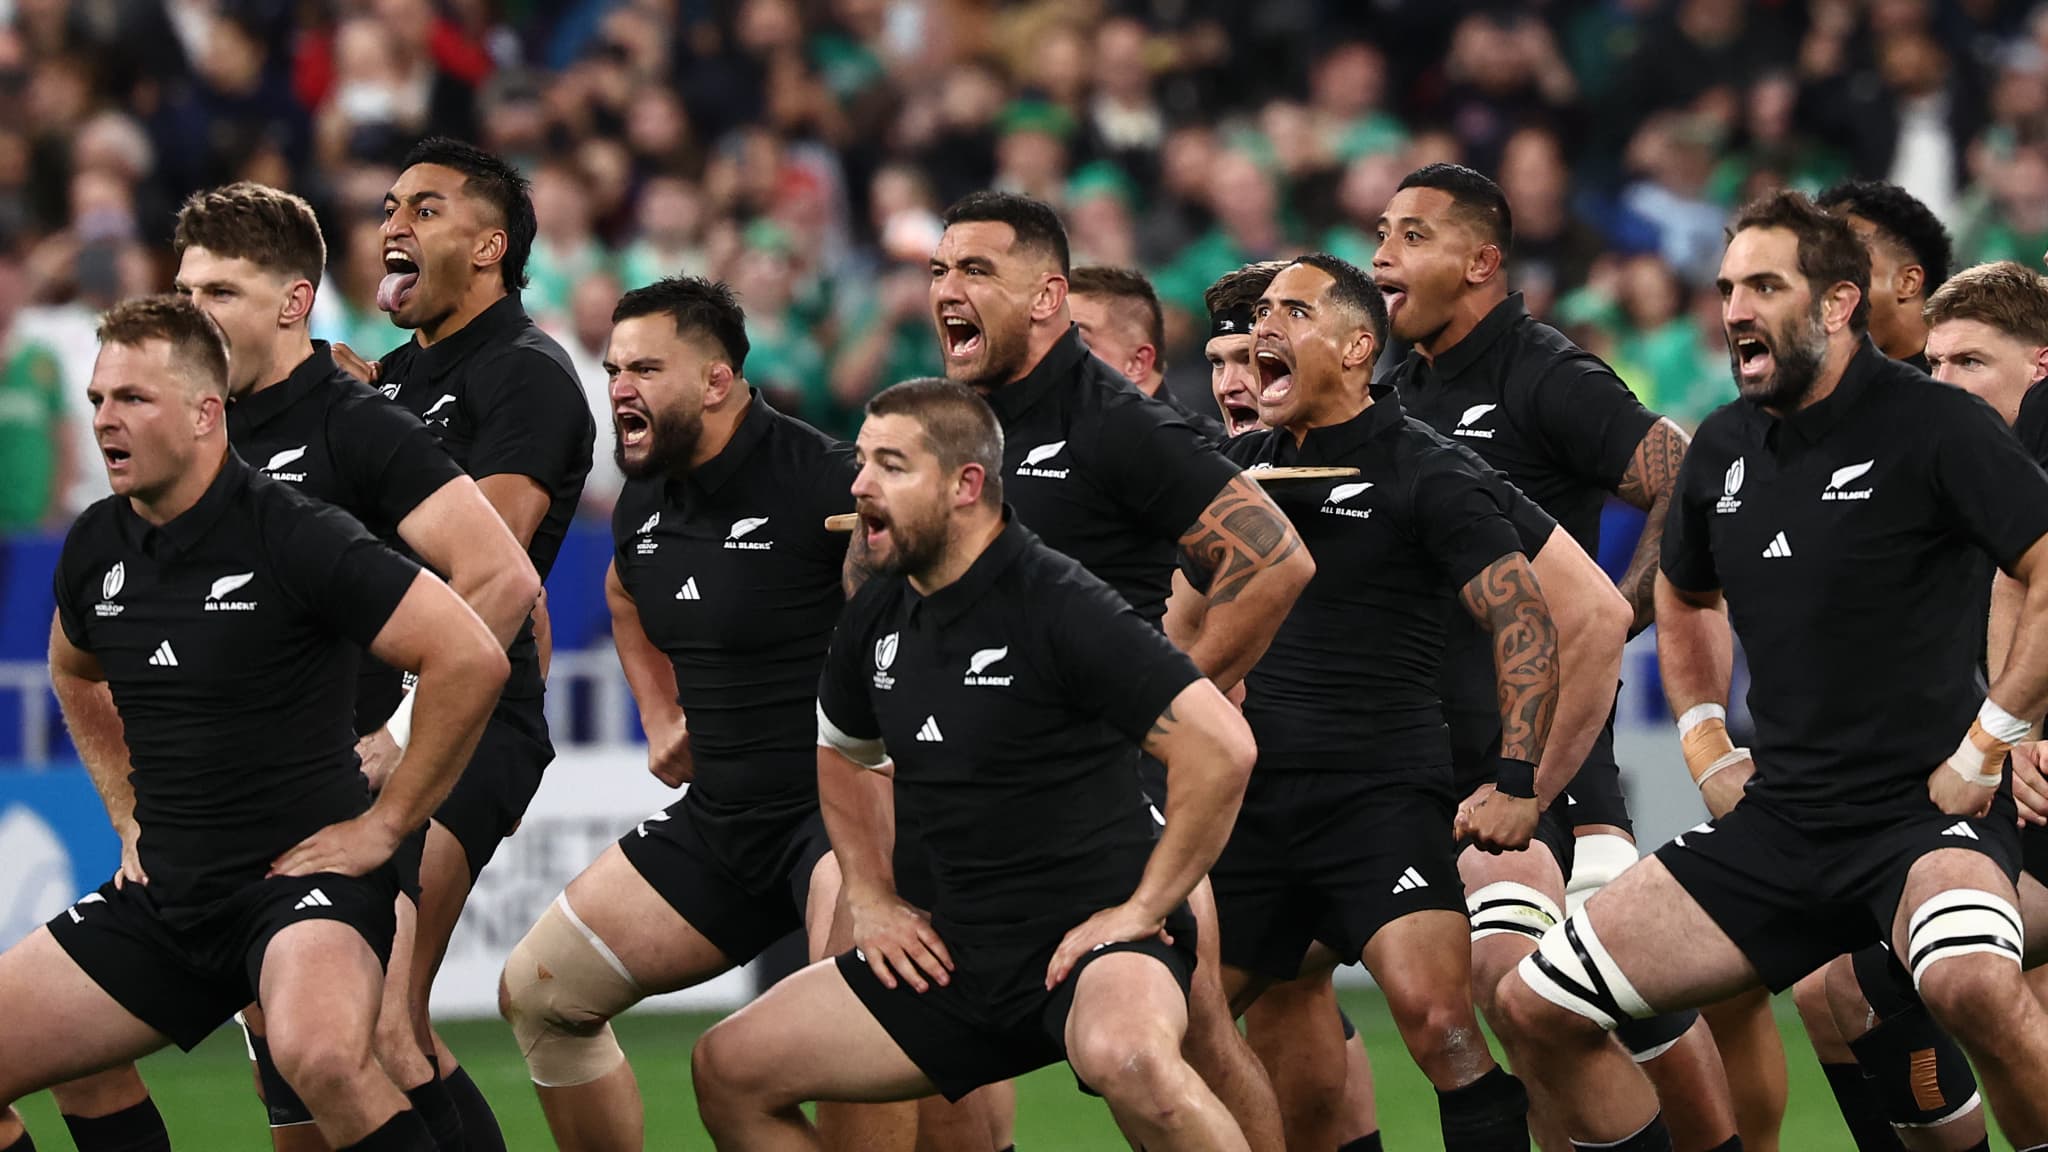 New Zealand: All Blacks' Haka covered in chants, with Irish players responding